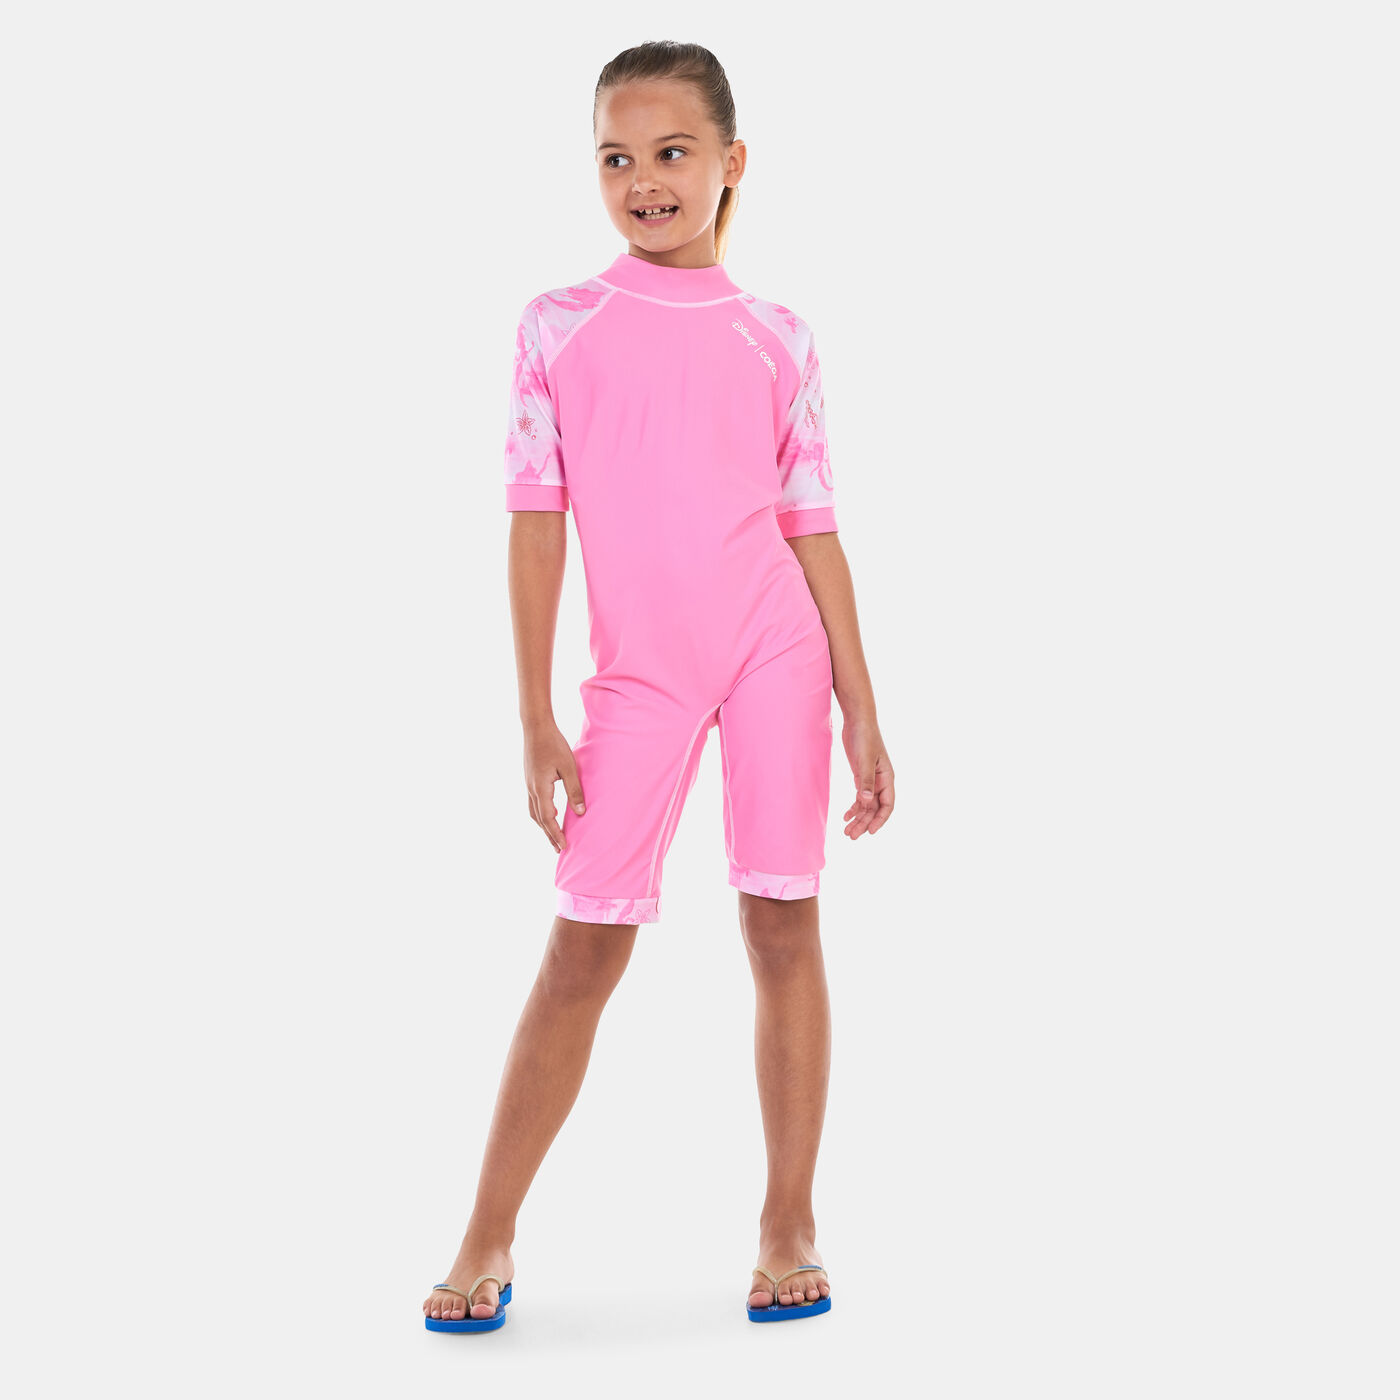 Kids' One-Piece Swimsuit